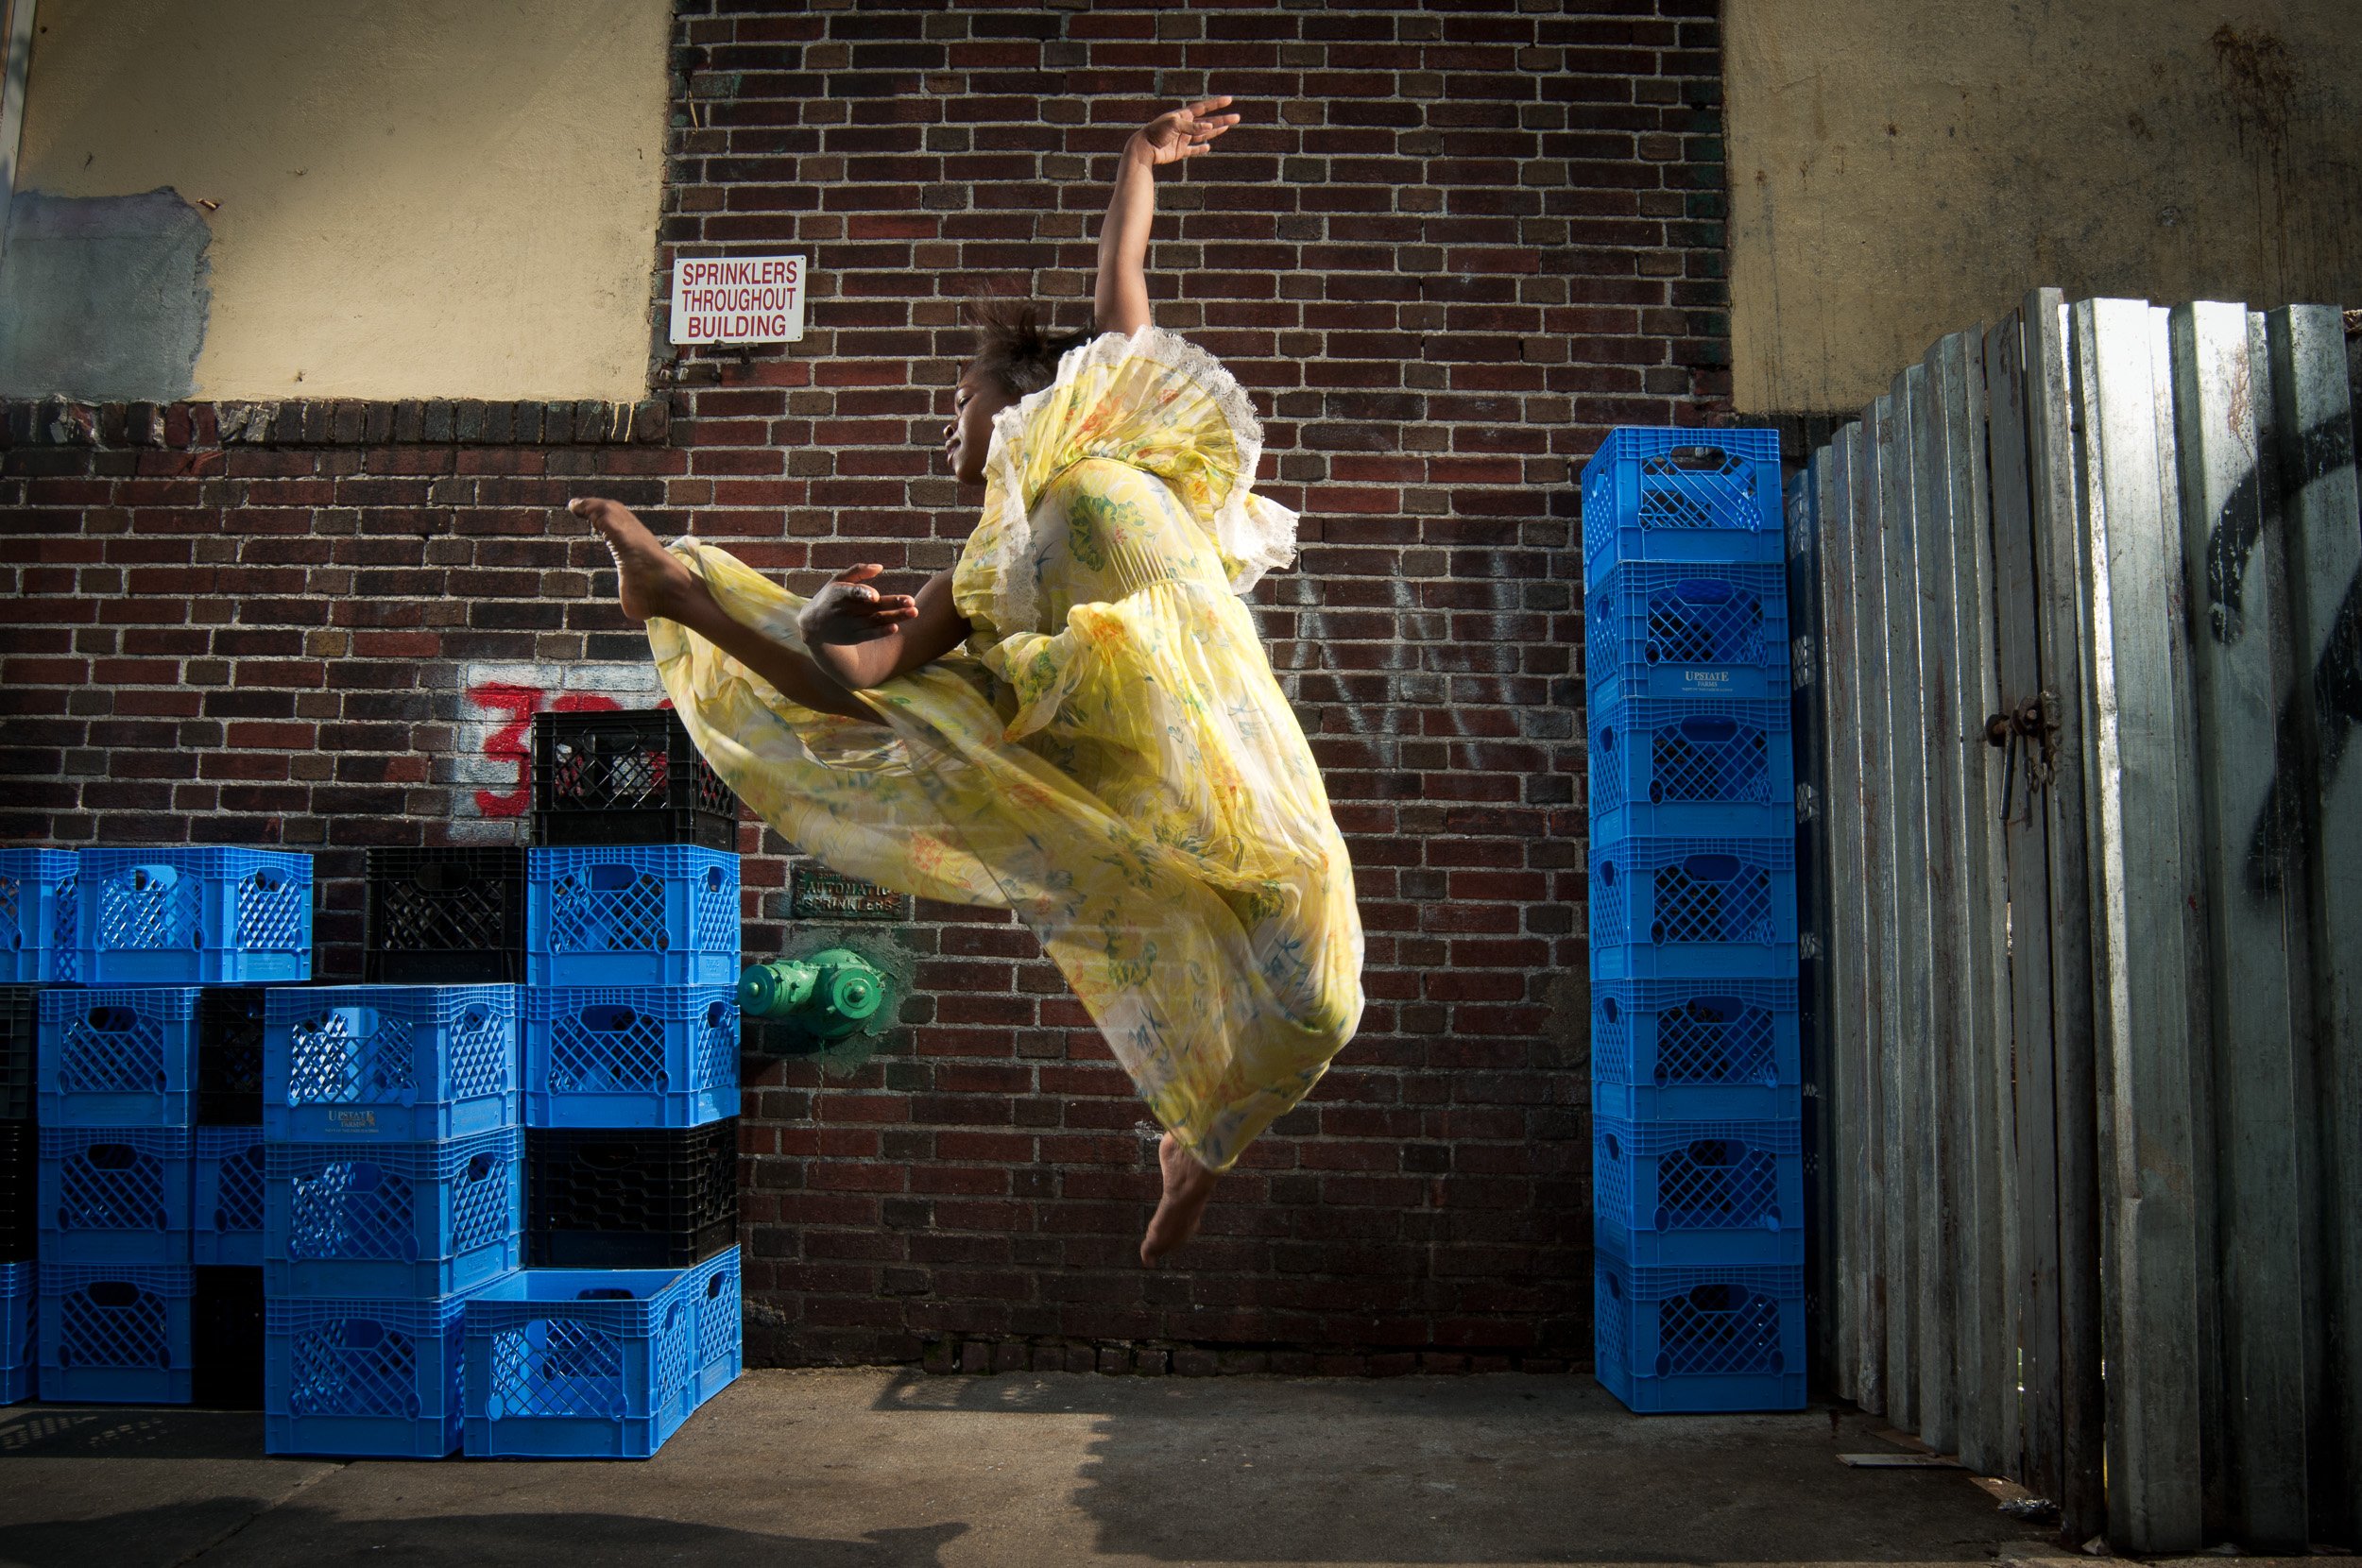 Carsten Fleck | Portrait Photography | Berlin | Dancer in yellow dress.jpg